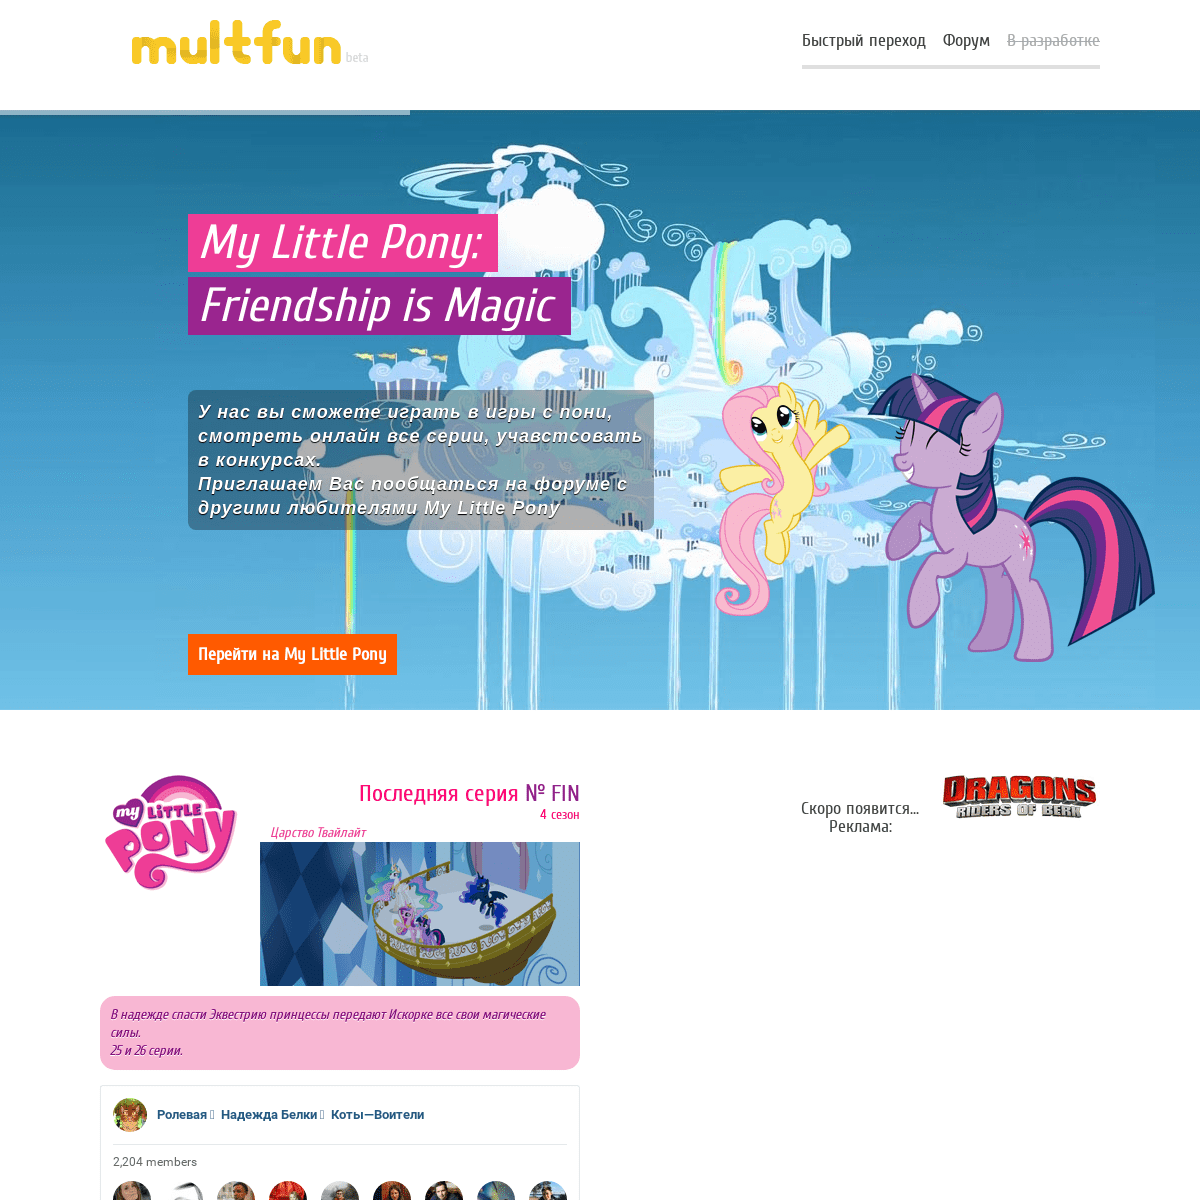 A complete backup of multfun.com